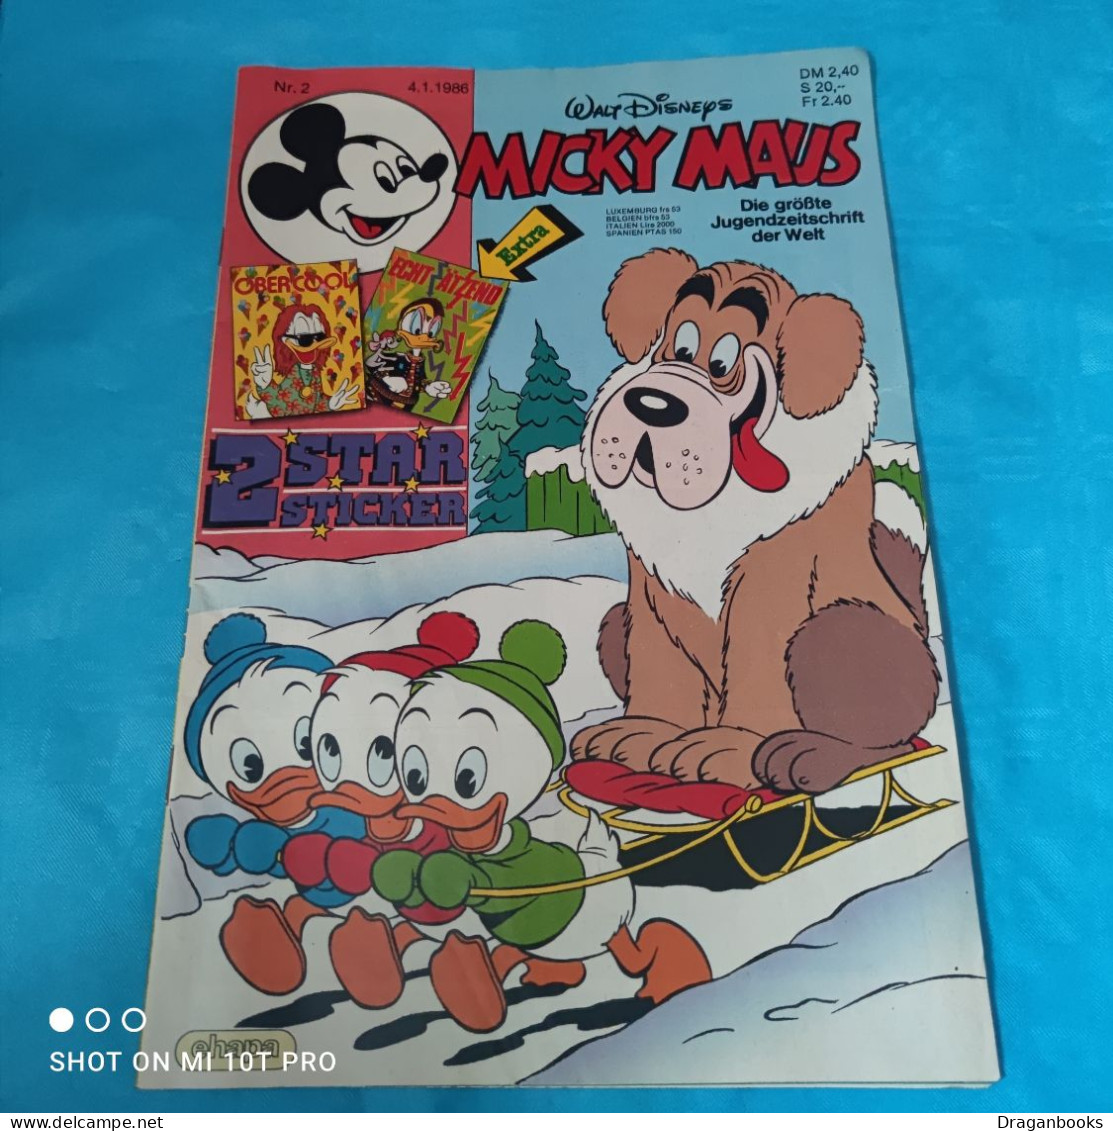 Micky Maus Nr. 2 - 4.1.1986 - Walt Disney